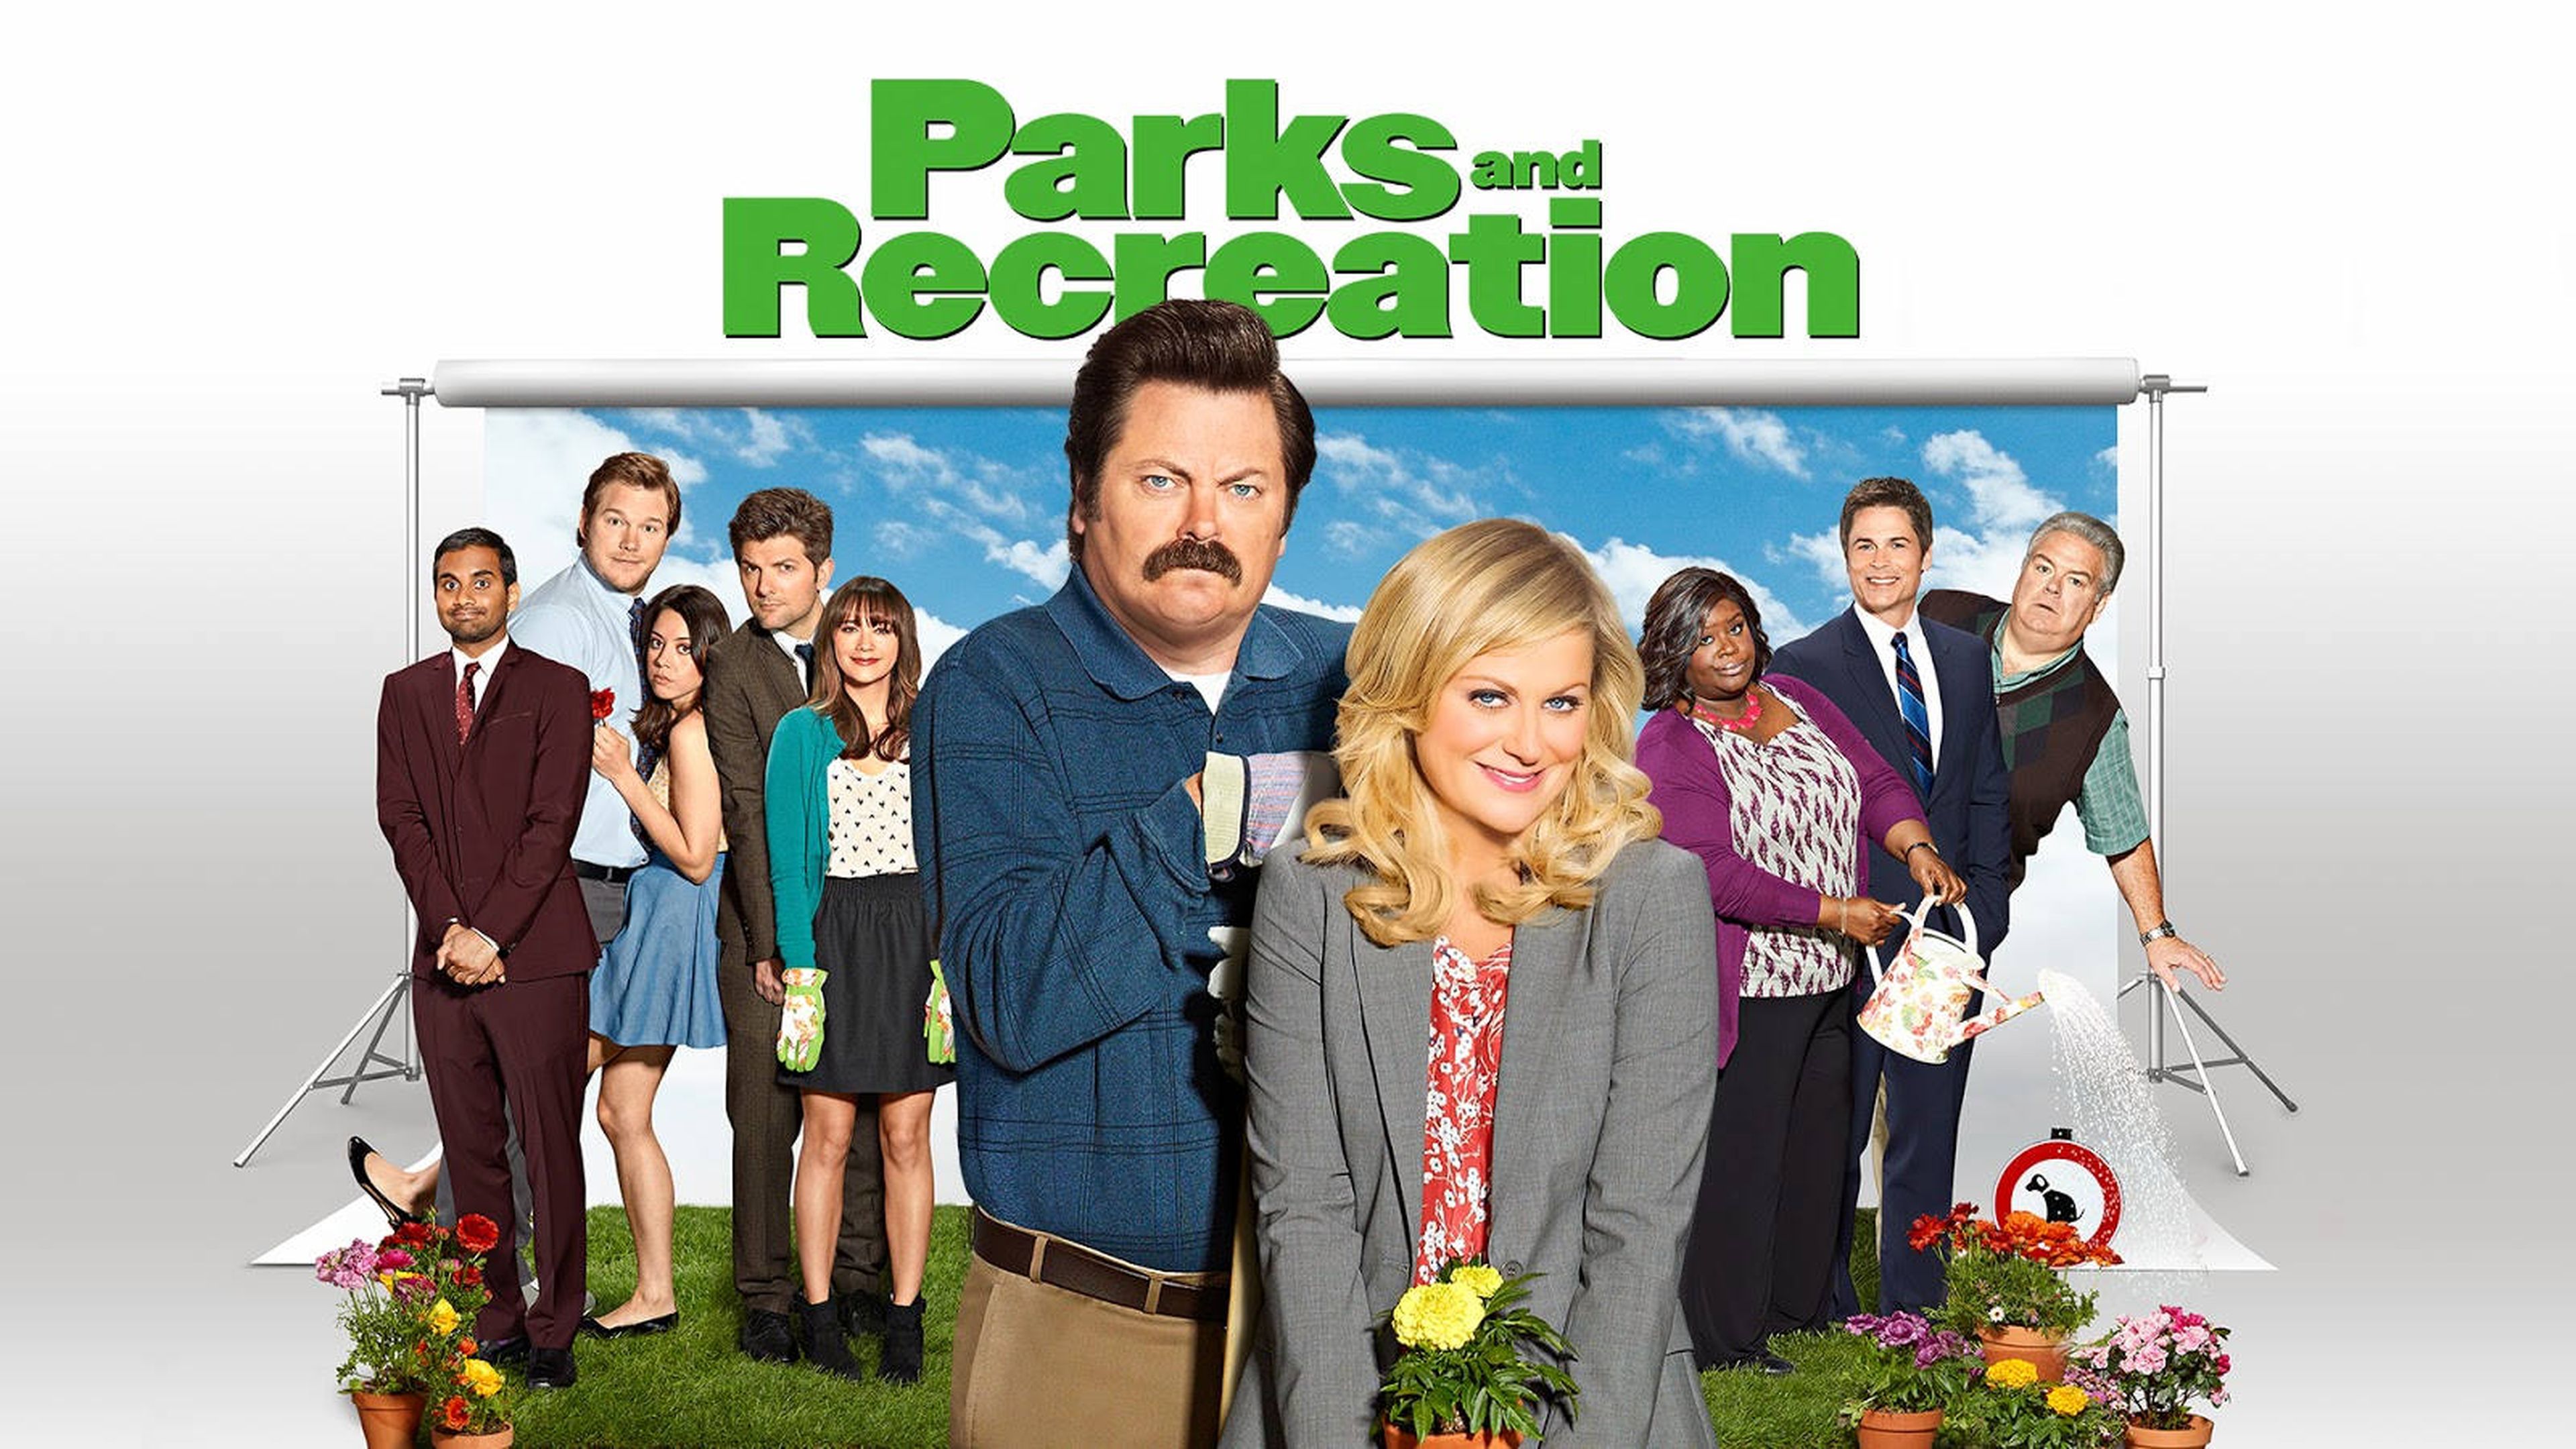 Parks and Recretation